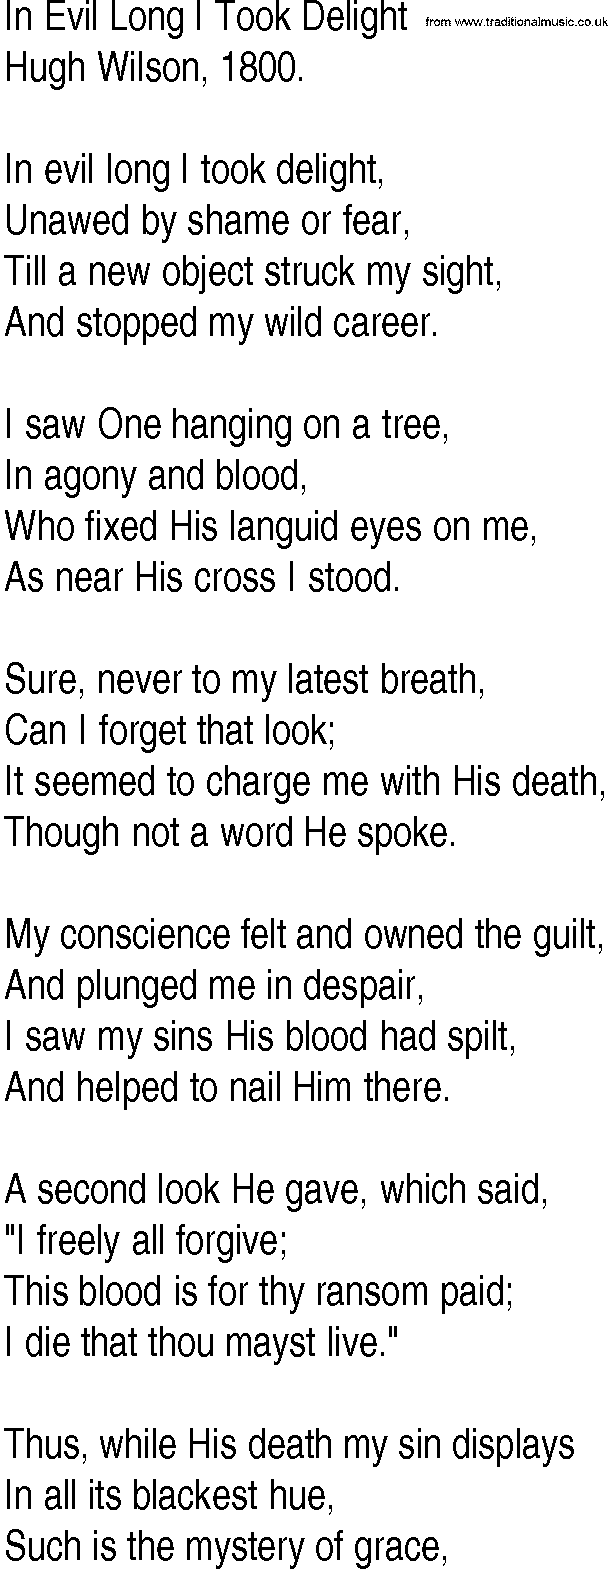 Hymn and Gospel Song: In Evil Long I Took Delight by Hugh Wilson lyrics